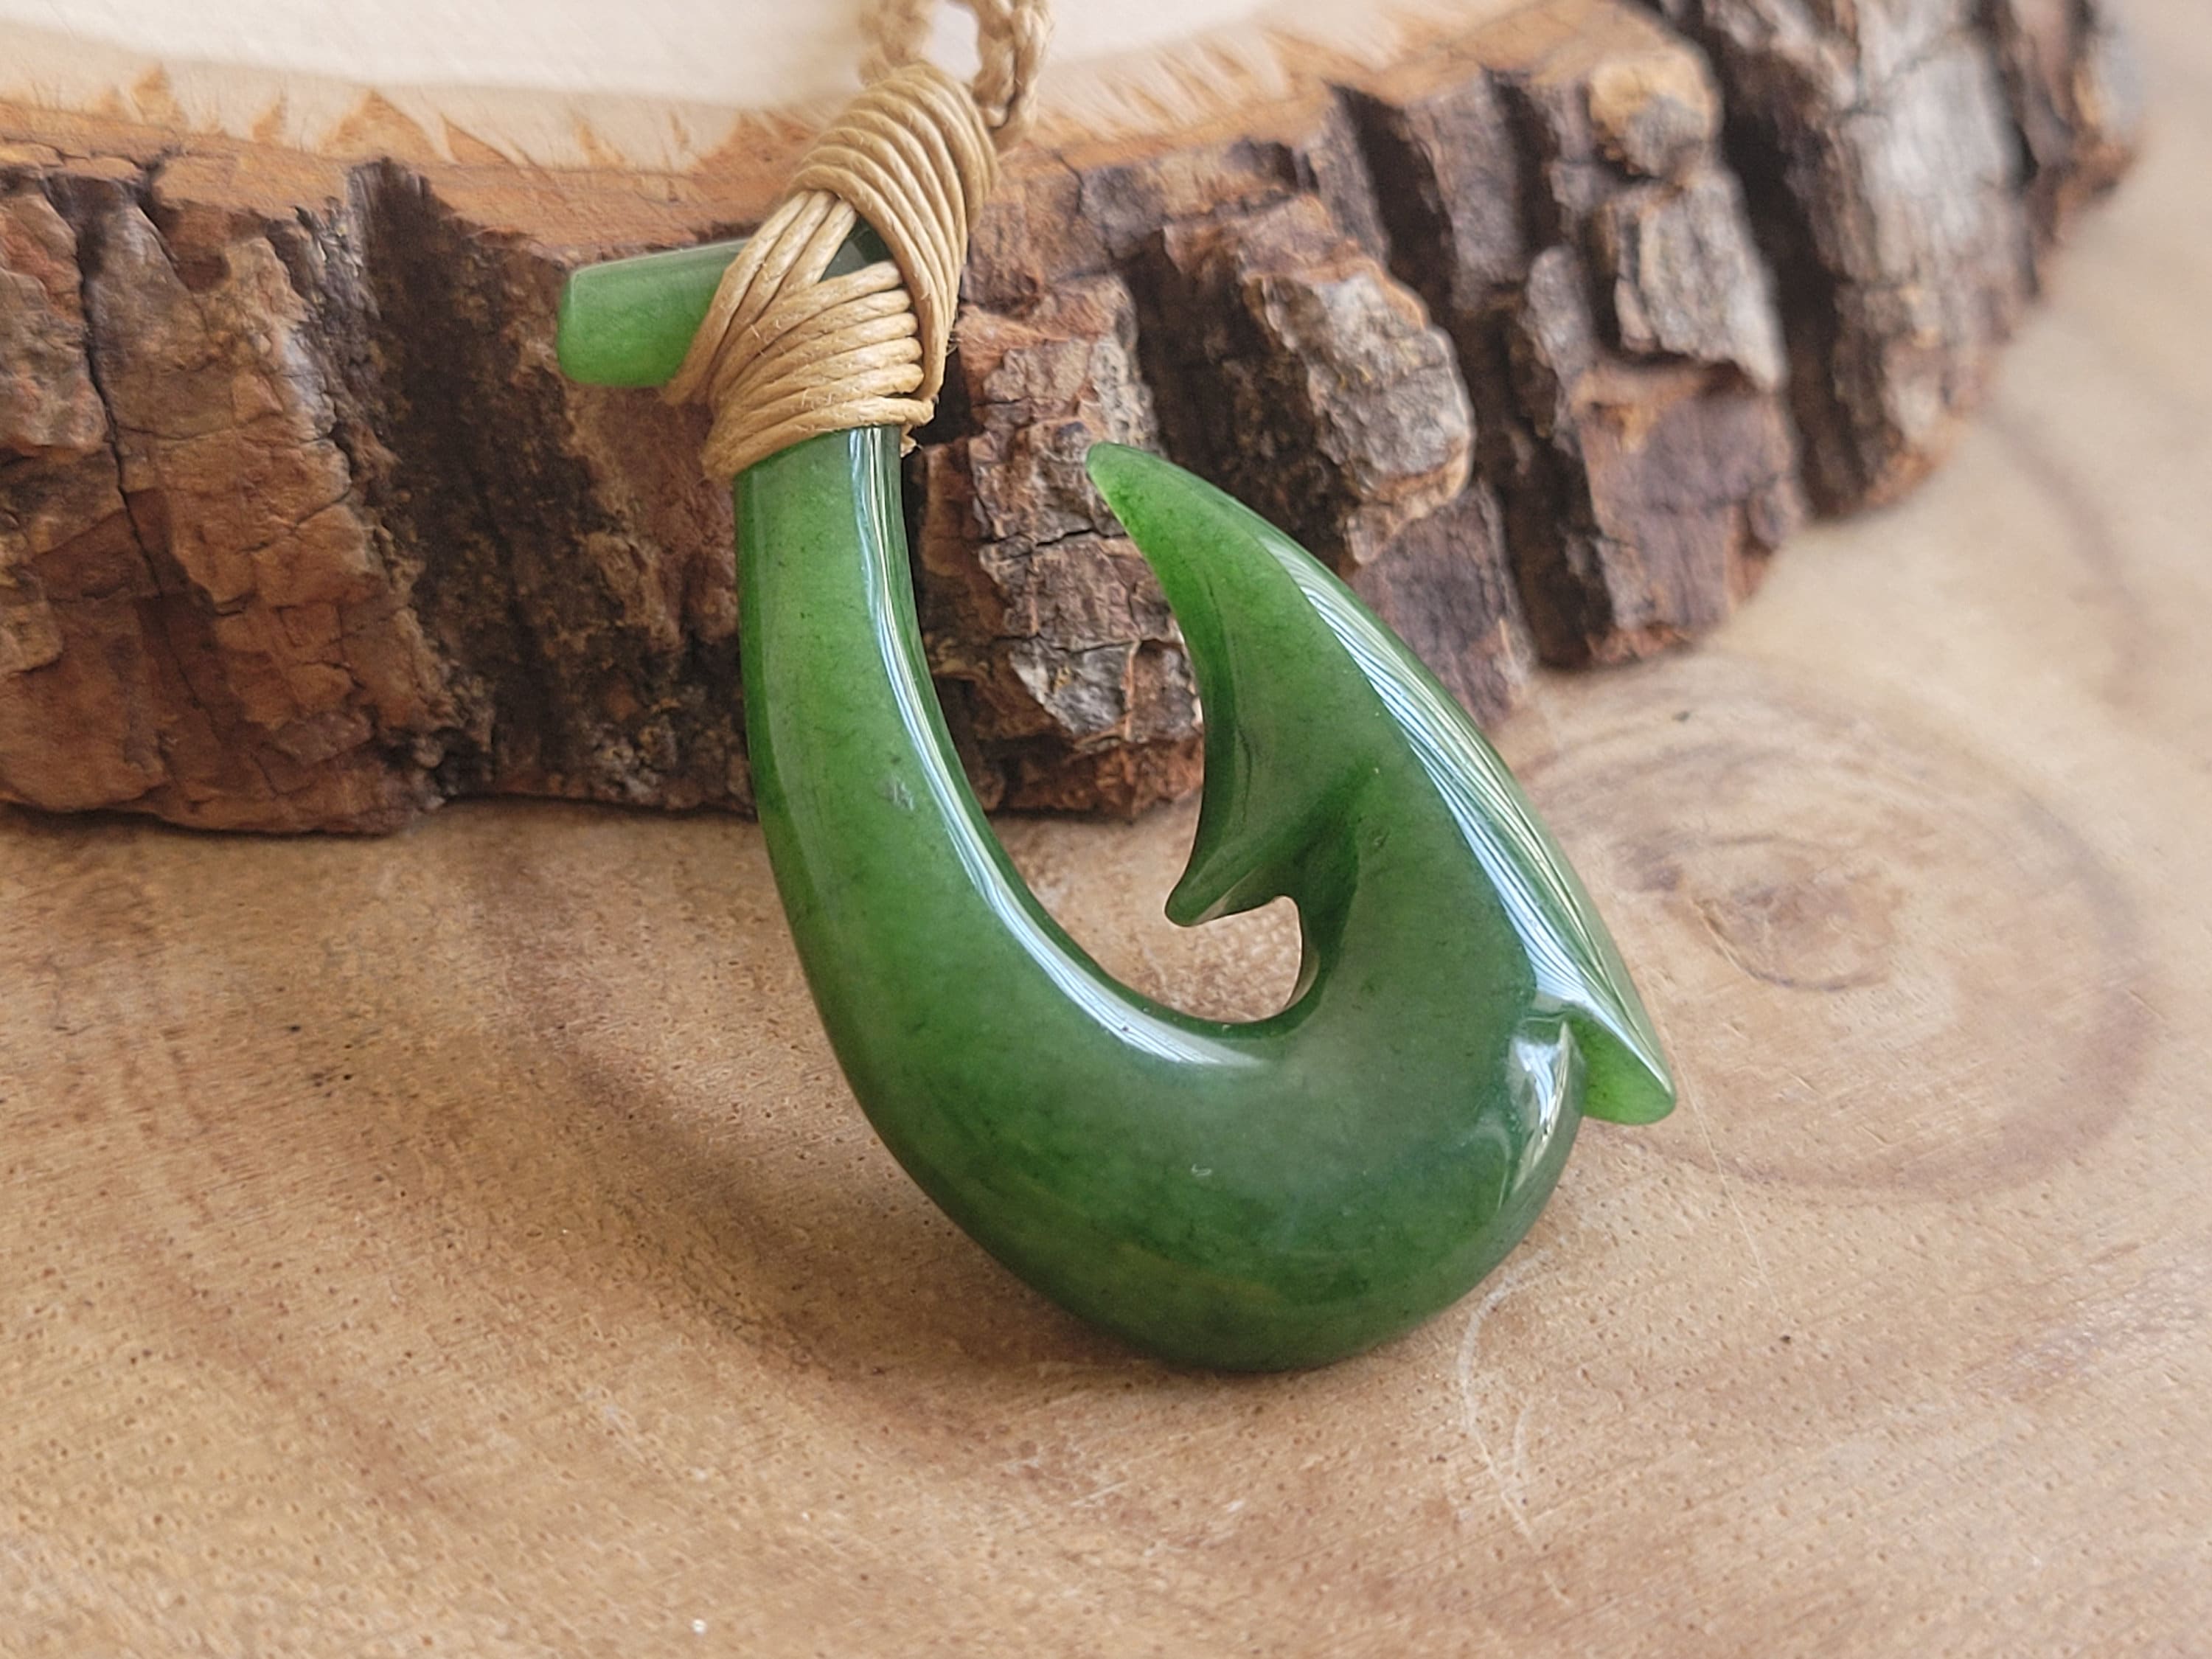 Wyoming jade fish hook necklace